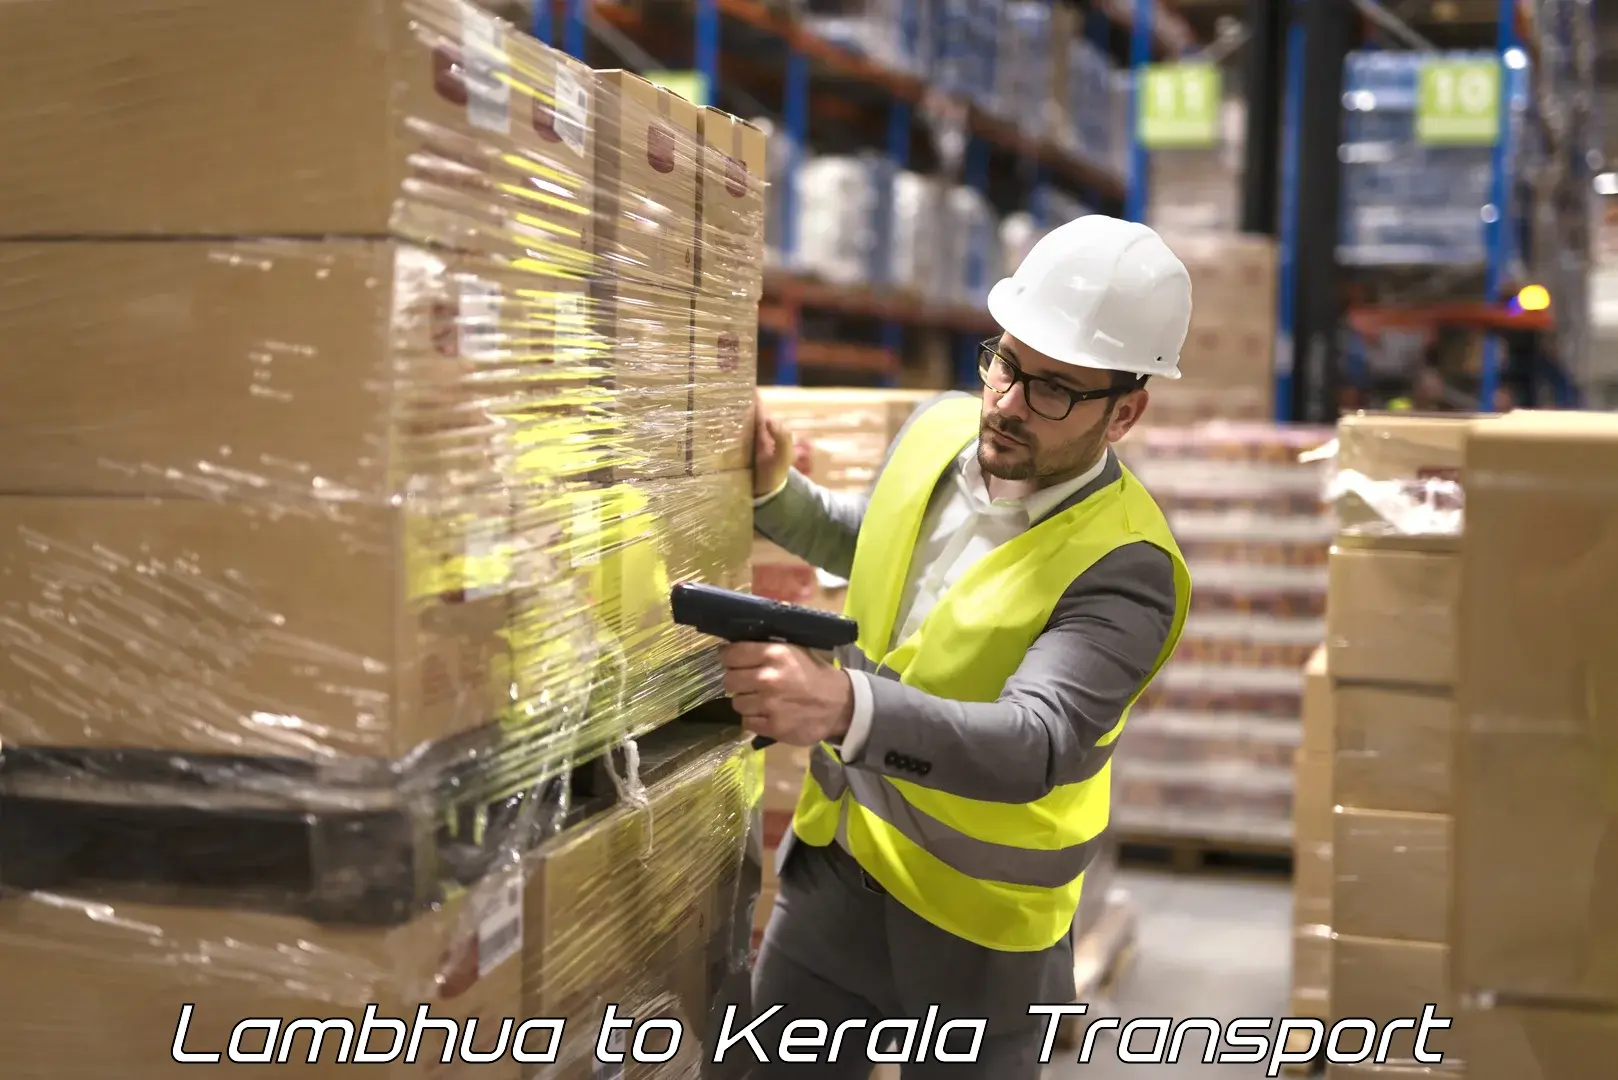 Goods delivery service Lambhua to Kerala